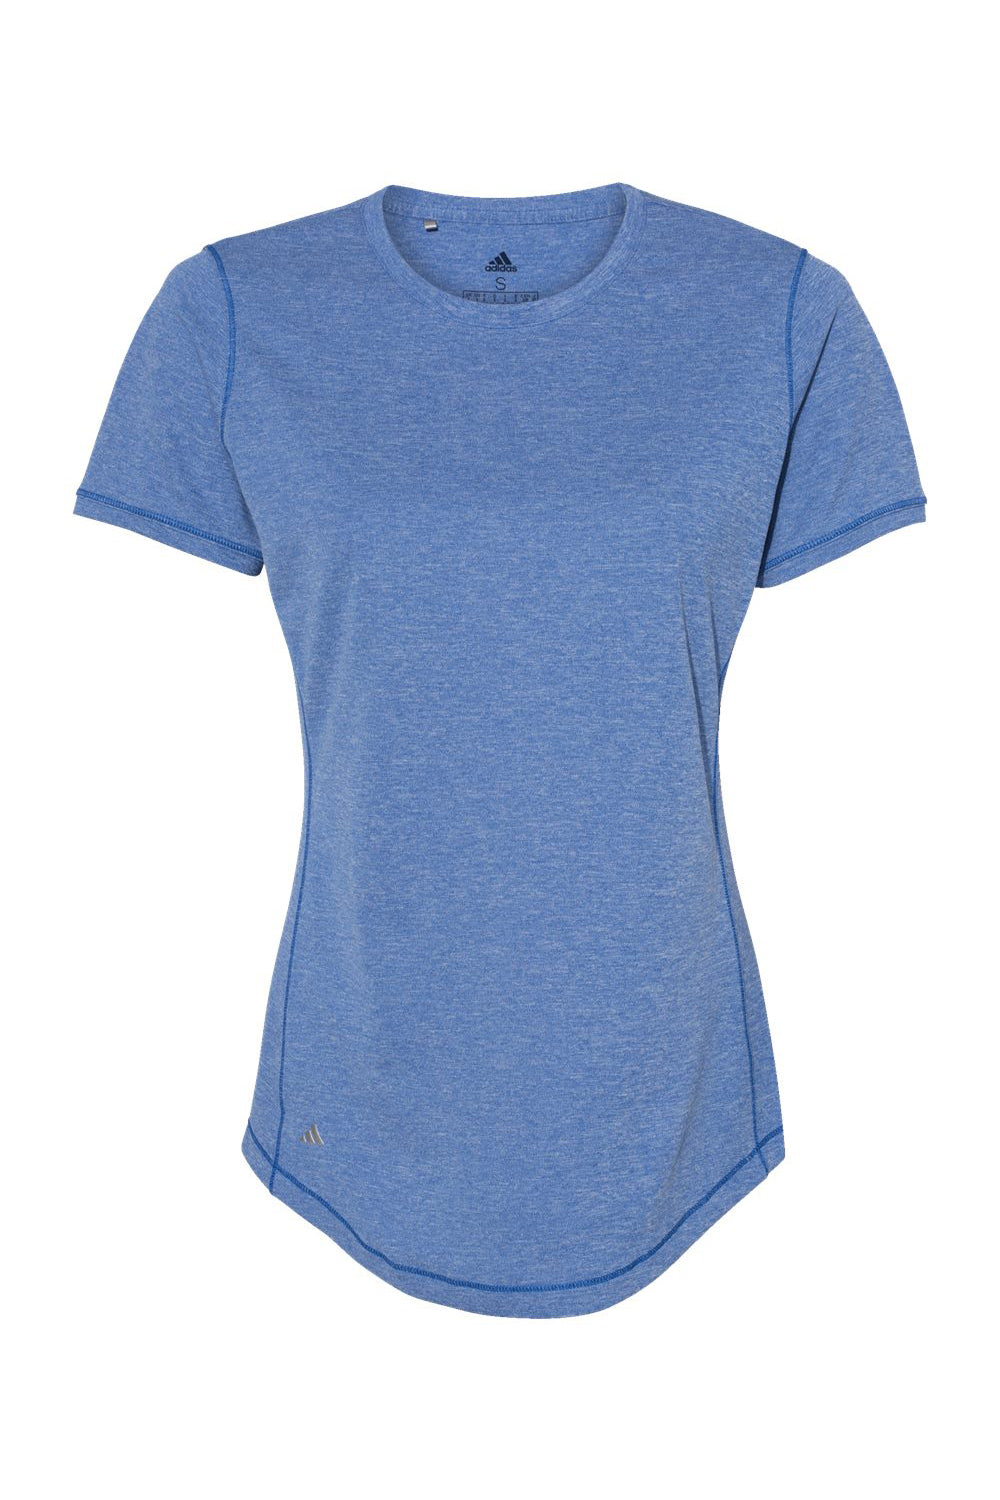 Adidas A377 Womens Short Sleeve Crewneck T-Shirt Heather Collegiate Royal Blue Flat Front